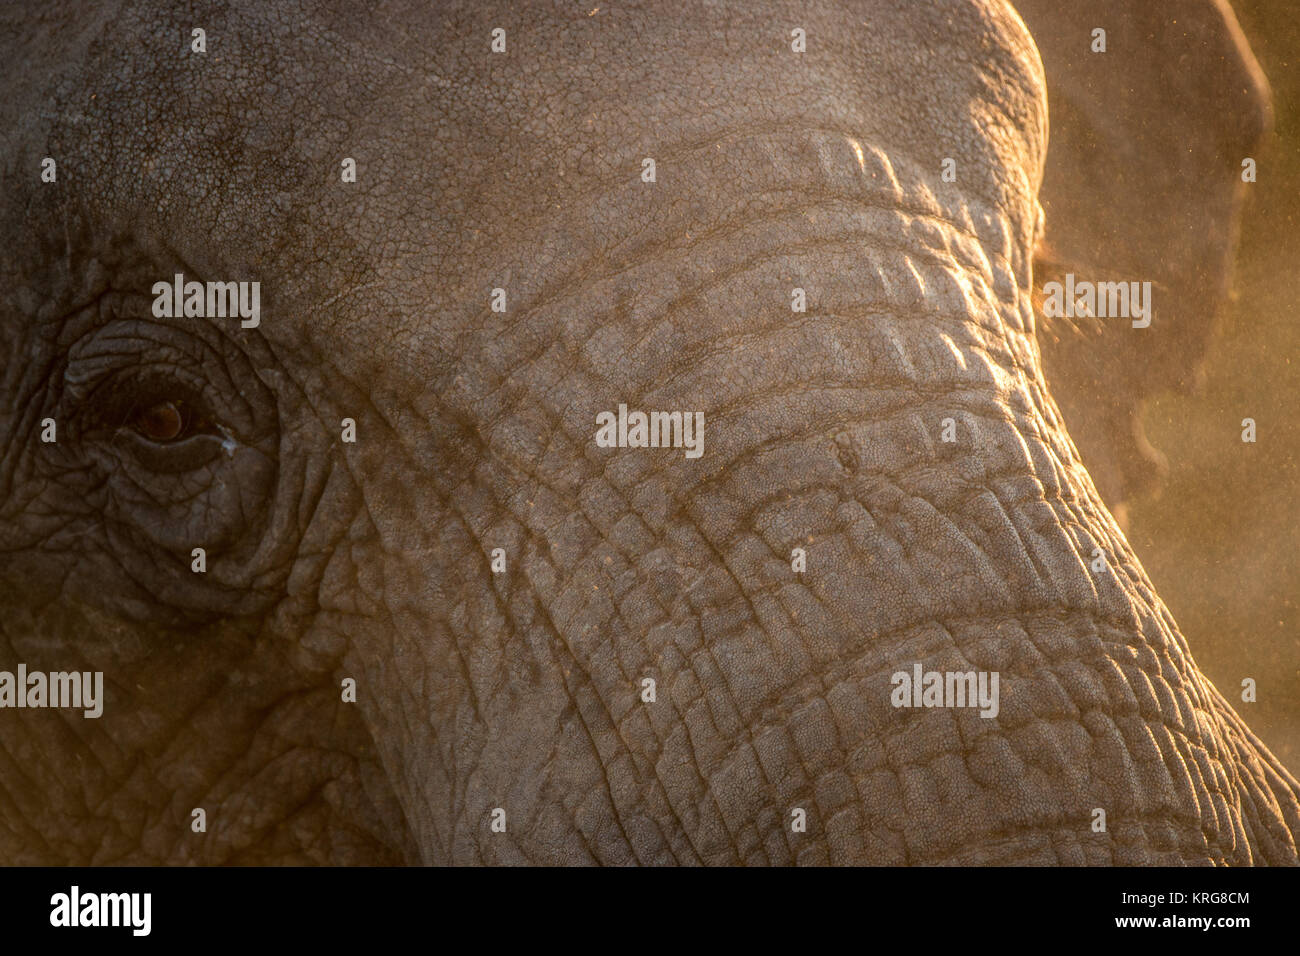 Close up of an Elephant eye. Stock Photo